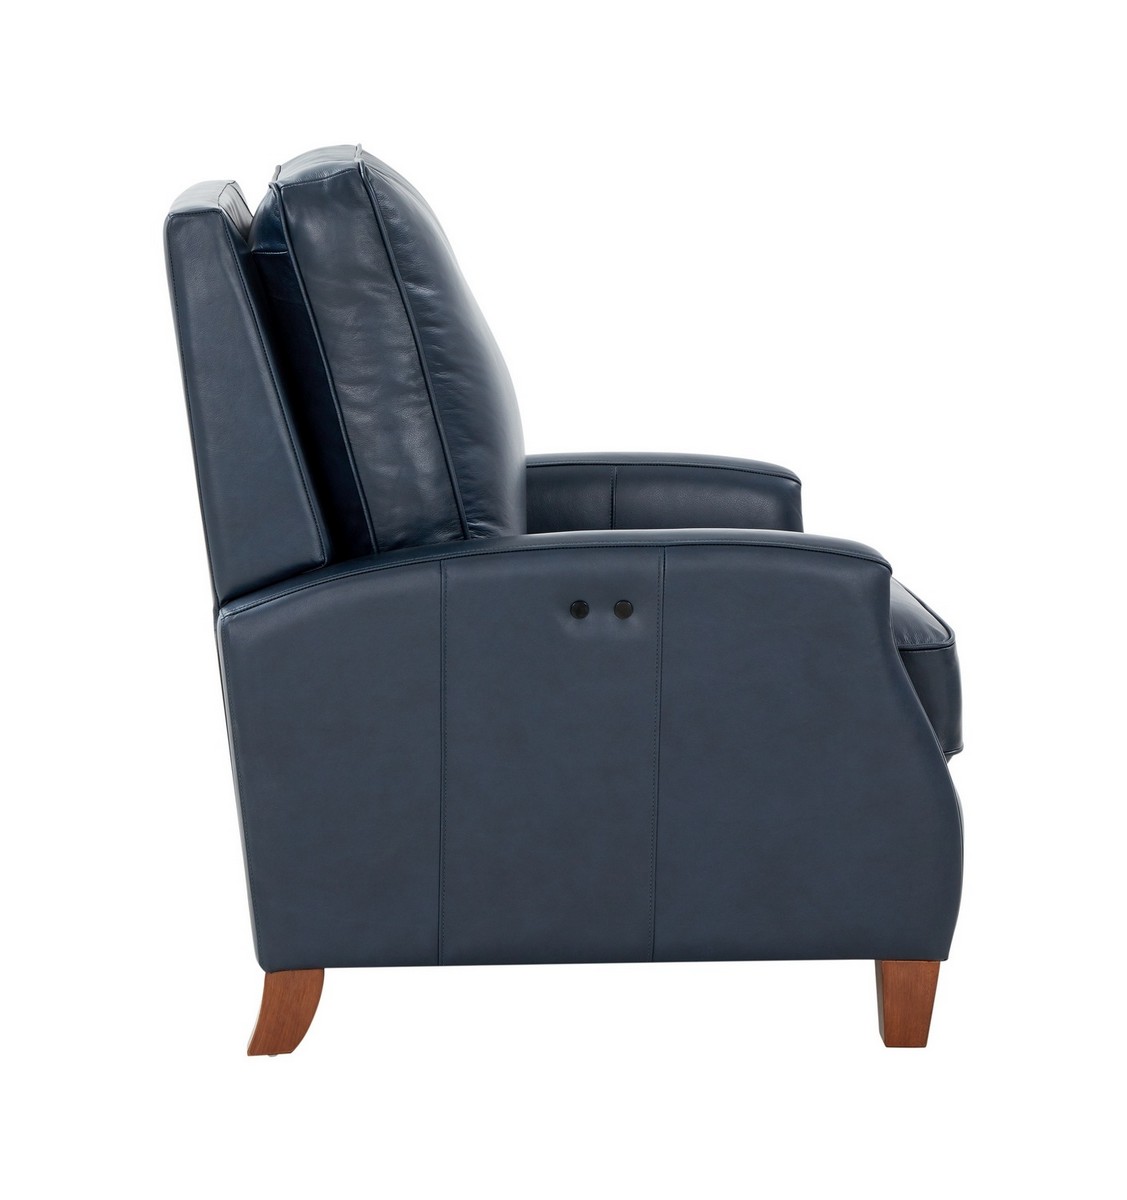 Barcalounger Penrose Power Recliner Chair - Shoreham Blue/All Leather